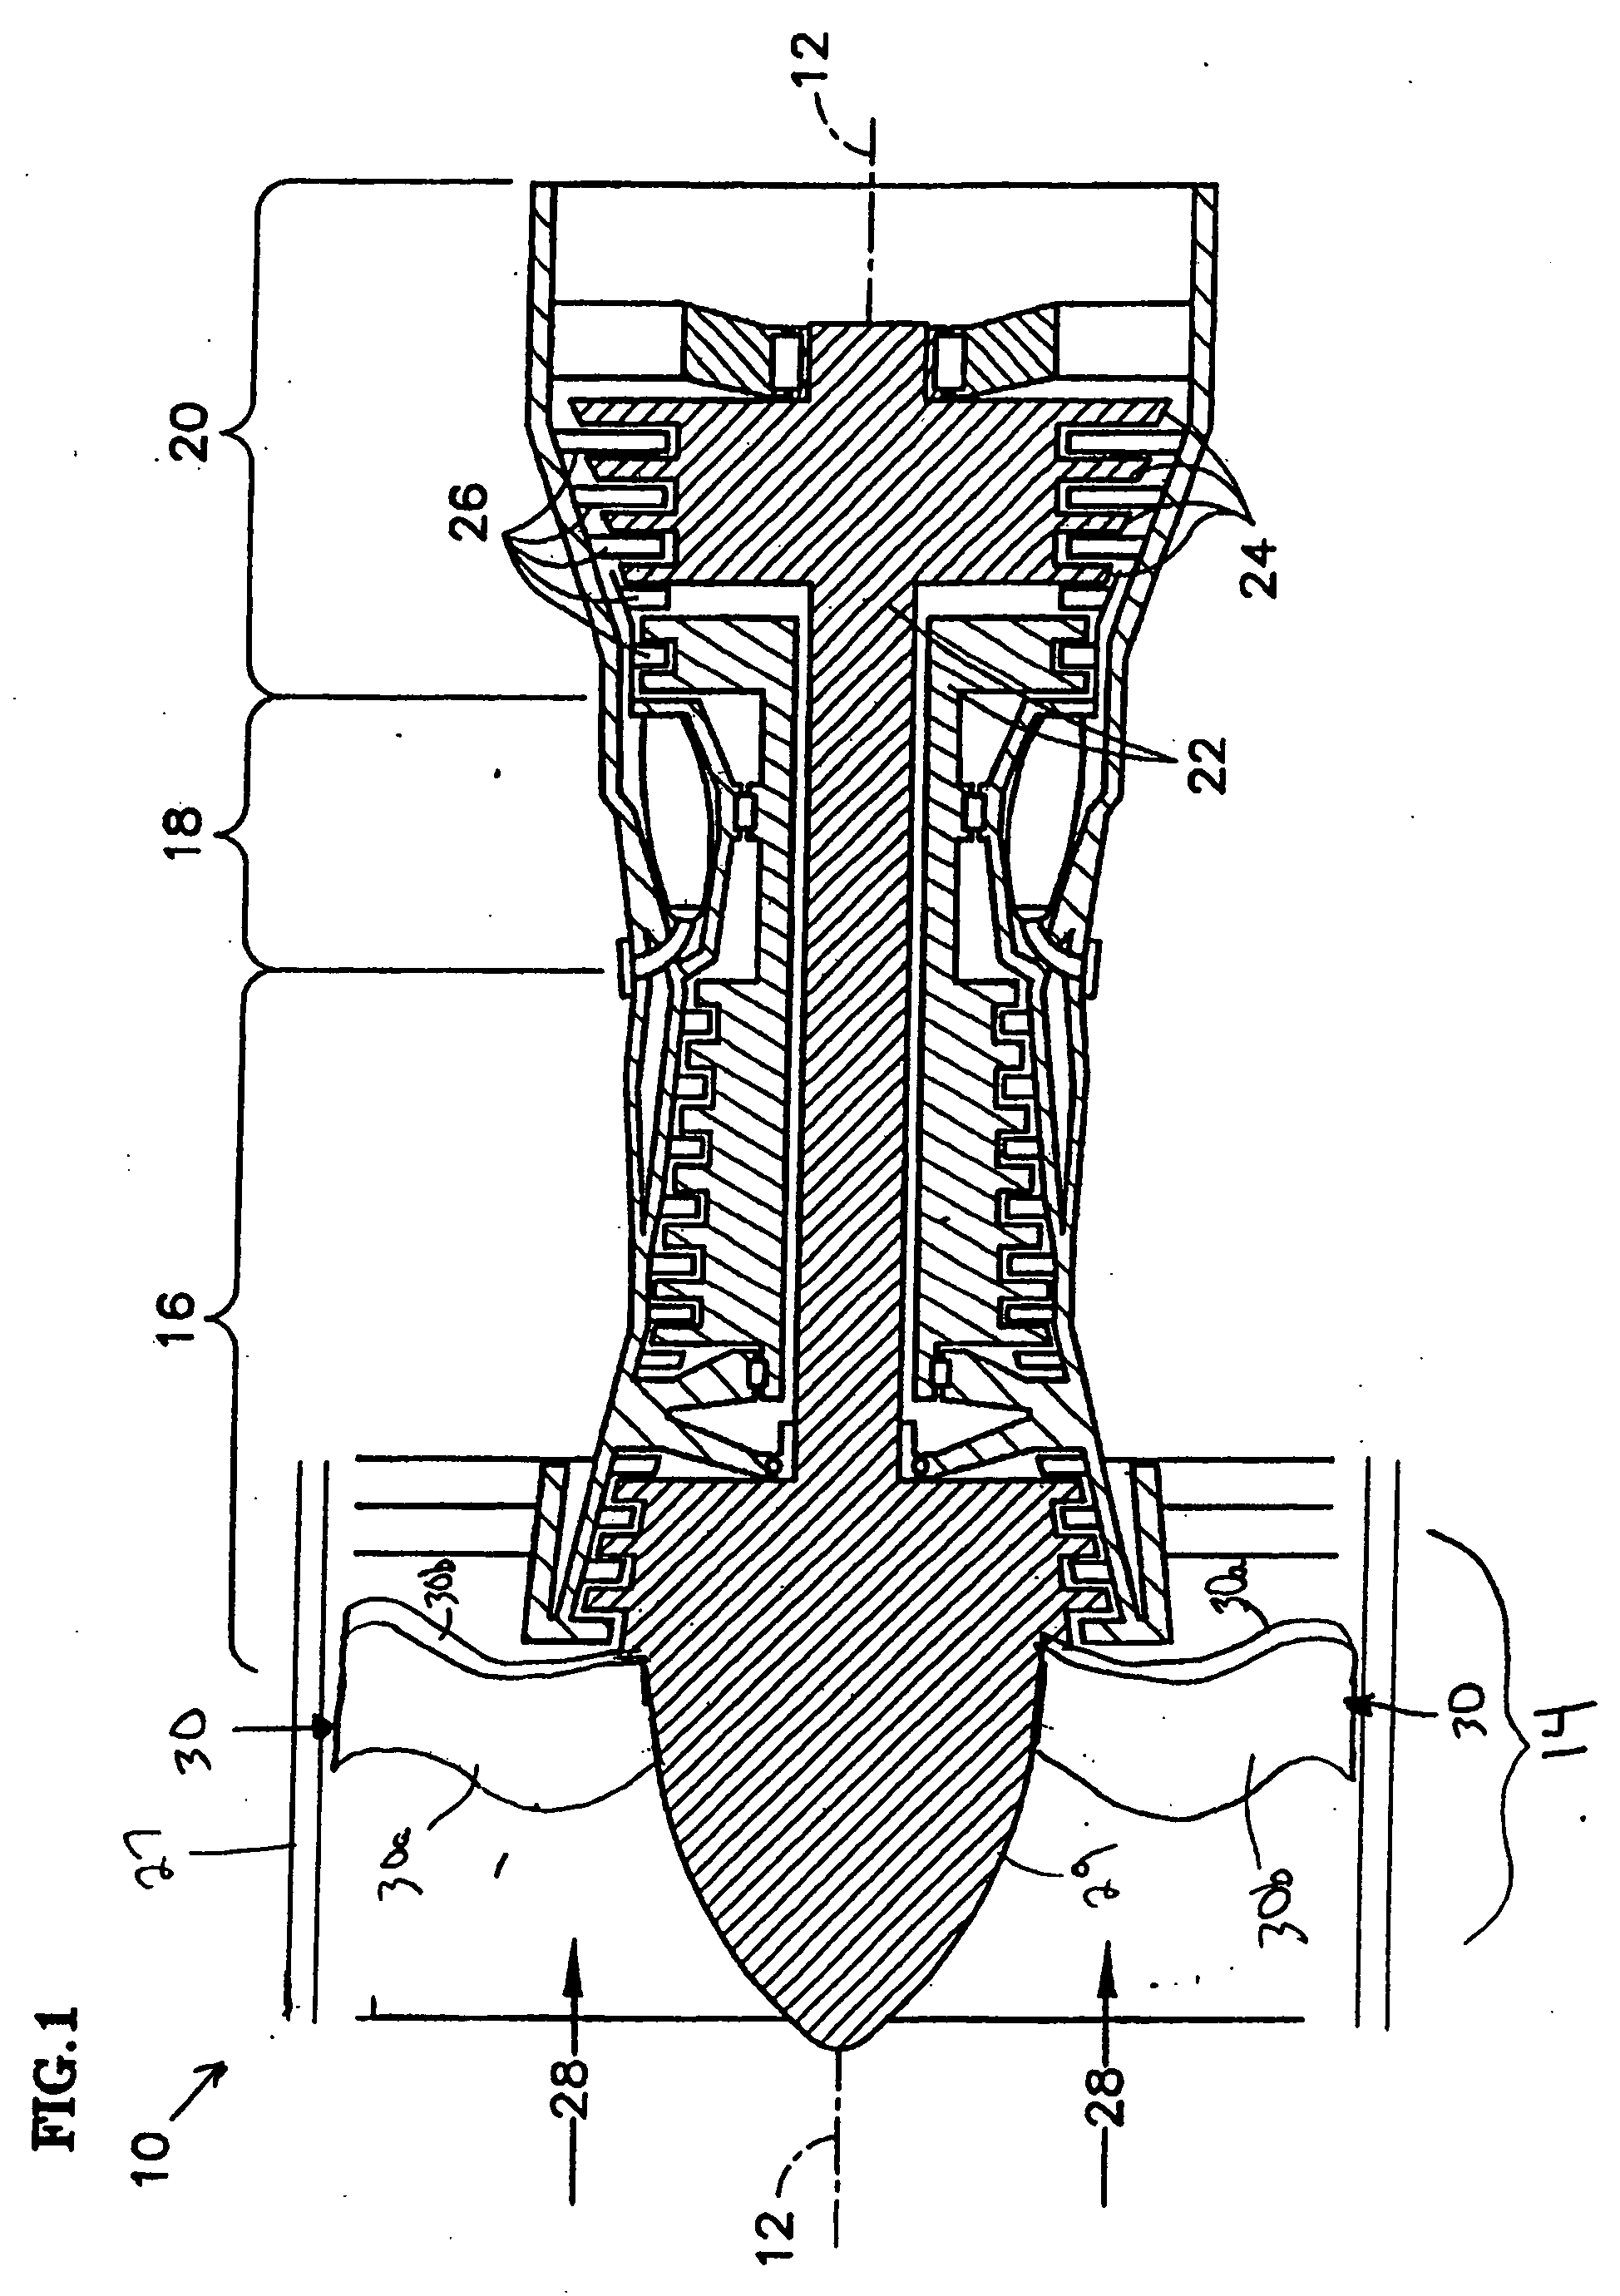 Hollow fan blade for gas turbine engine